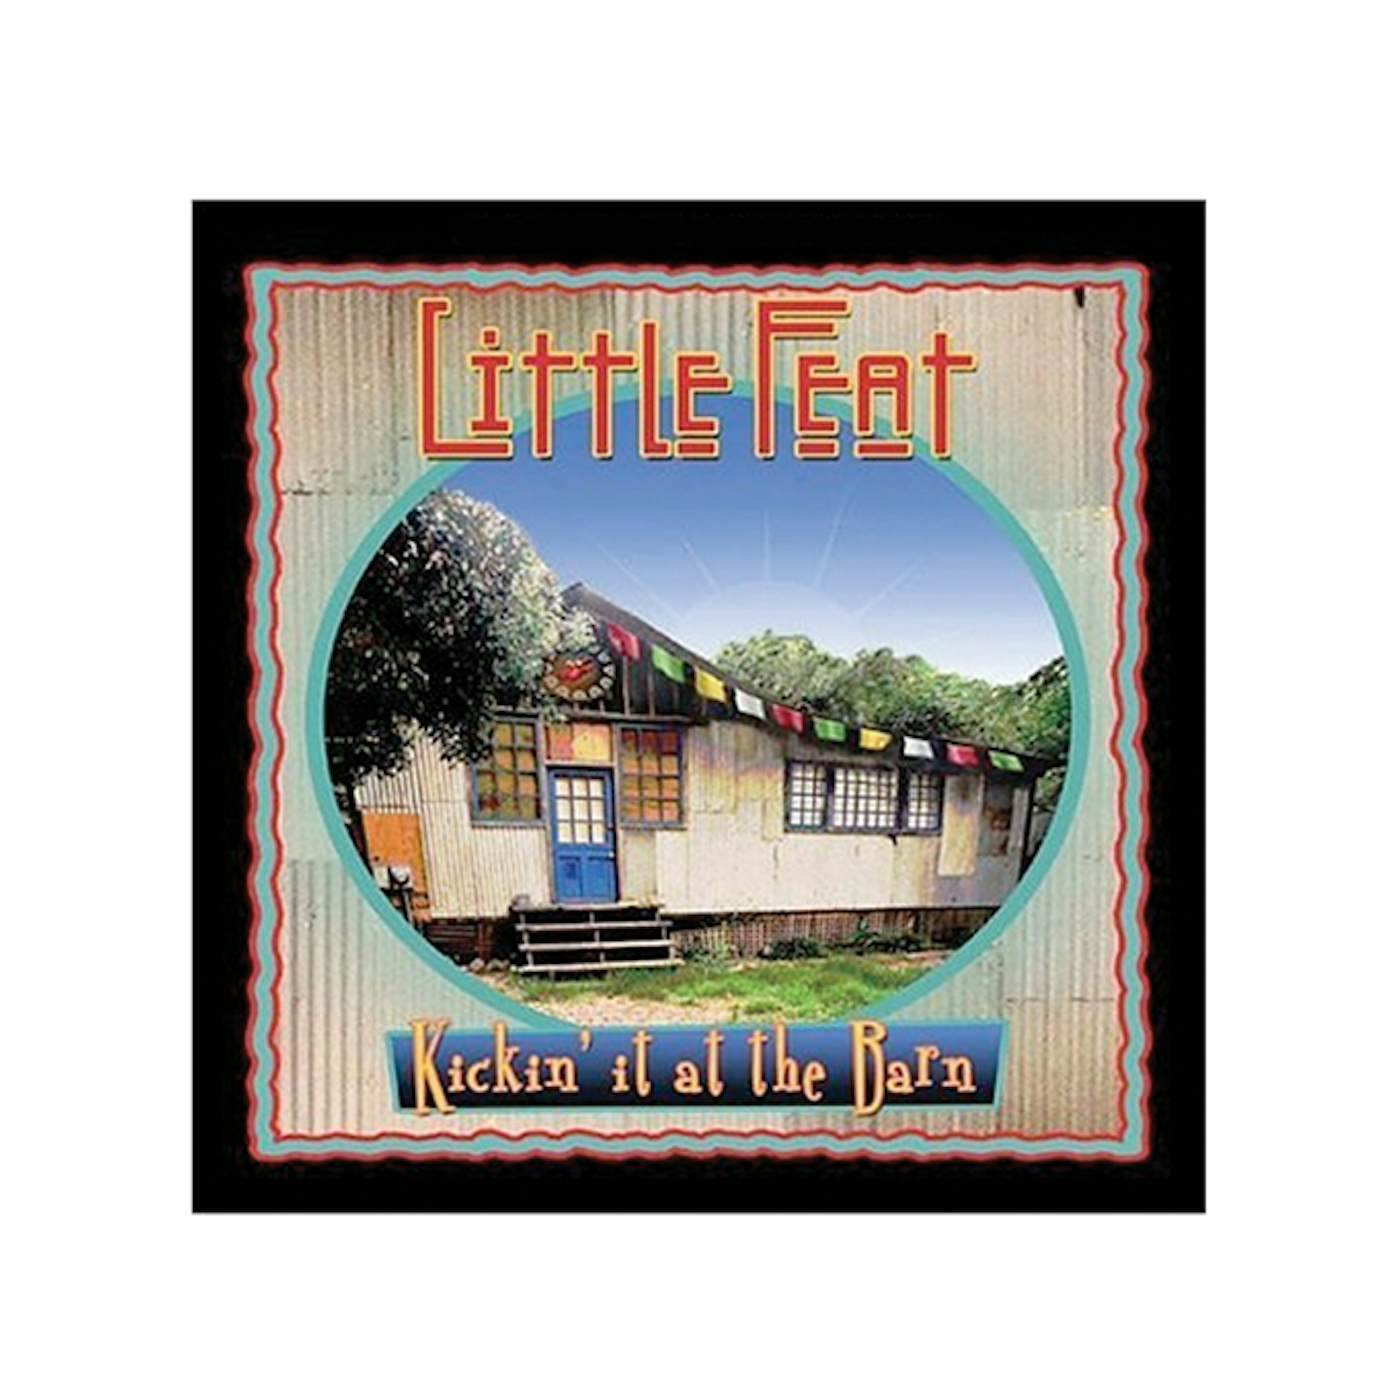 Little Feat "Kickin it at the Barn" CD